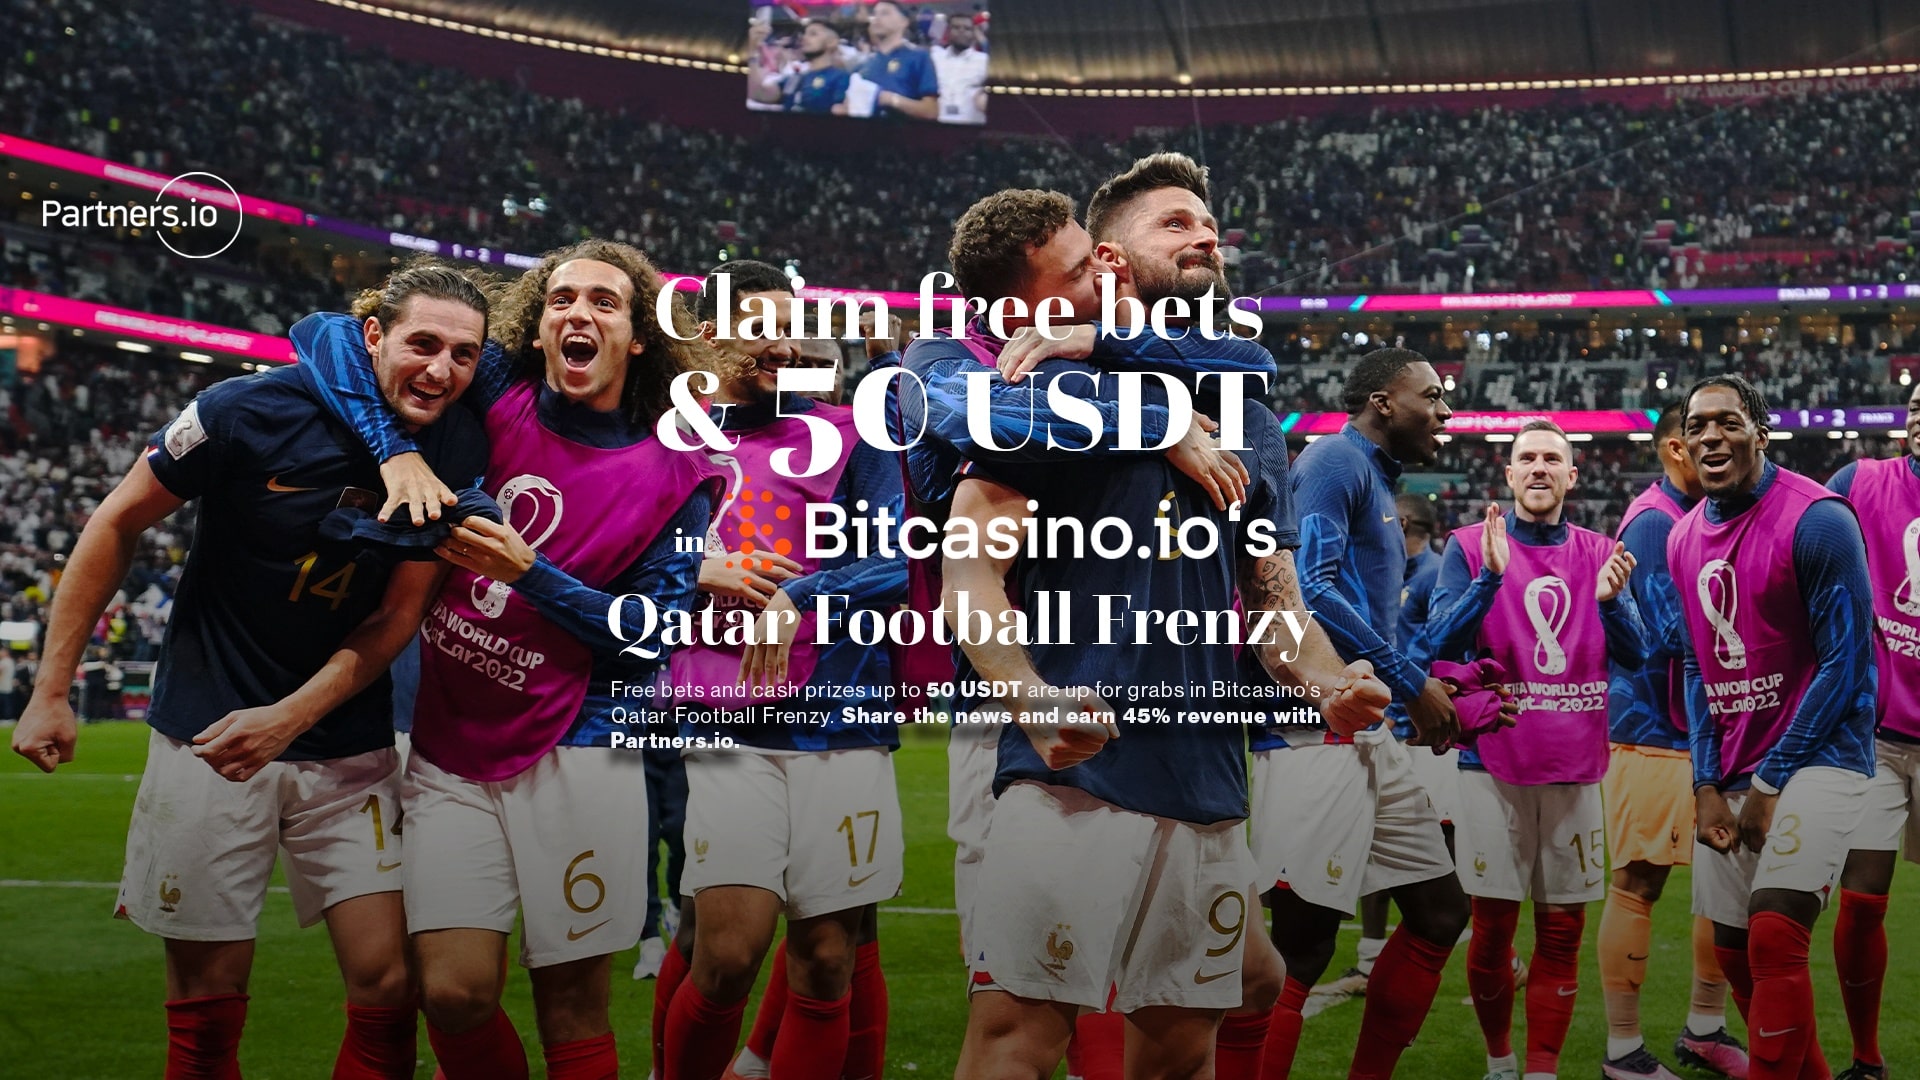 Claim free bets & 50 USDT in Bitcasino's Qatar Football Frenzy